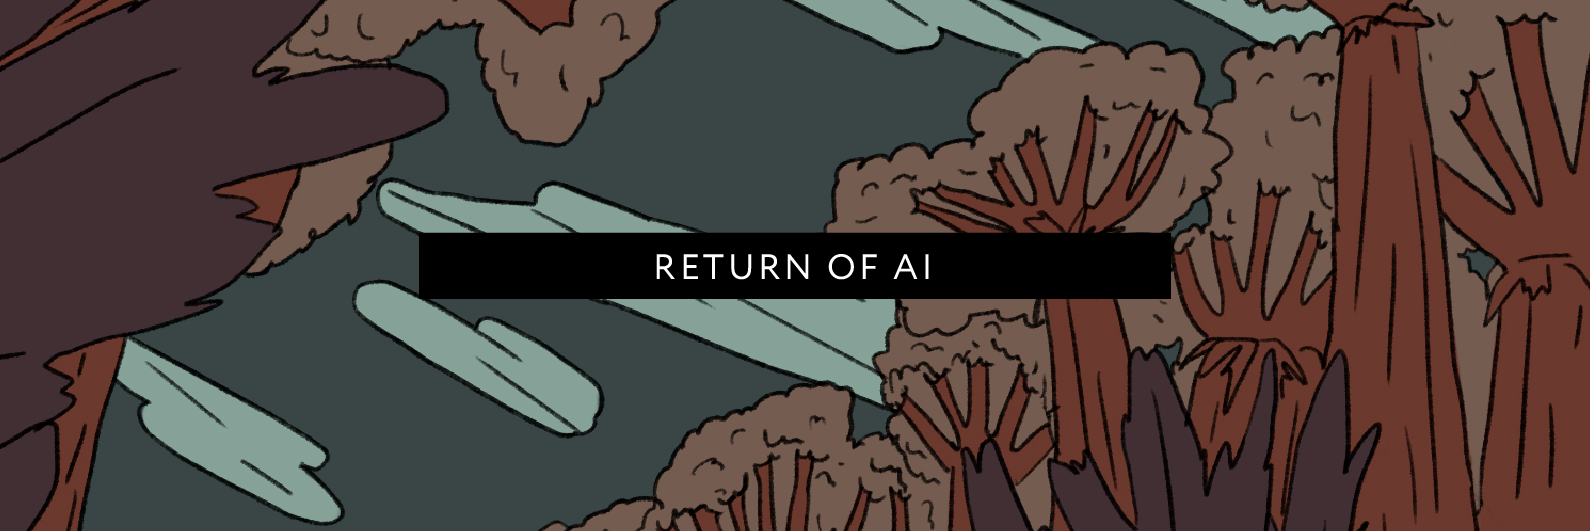 Return of Ai